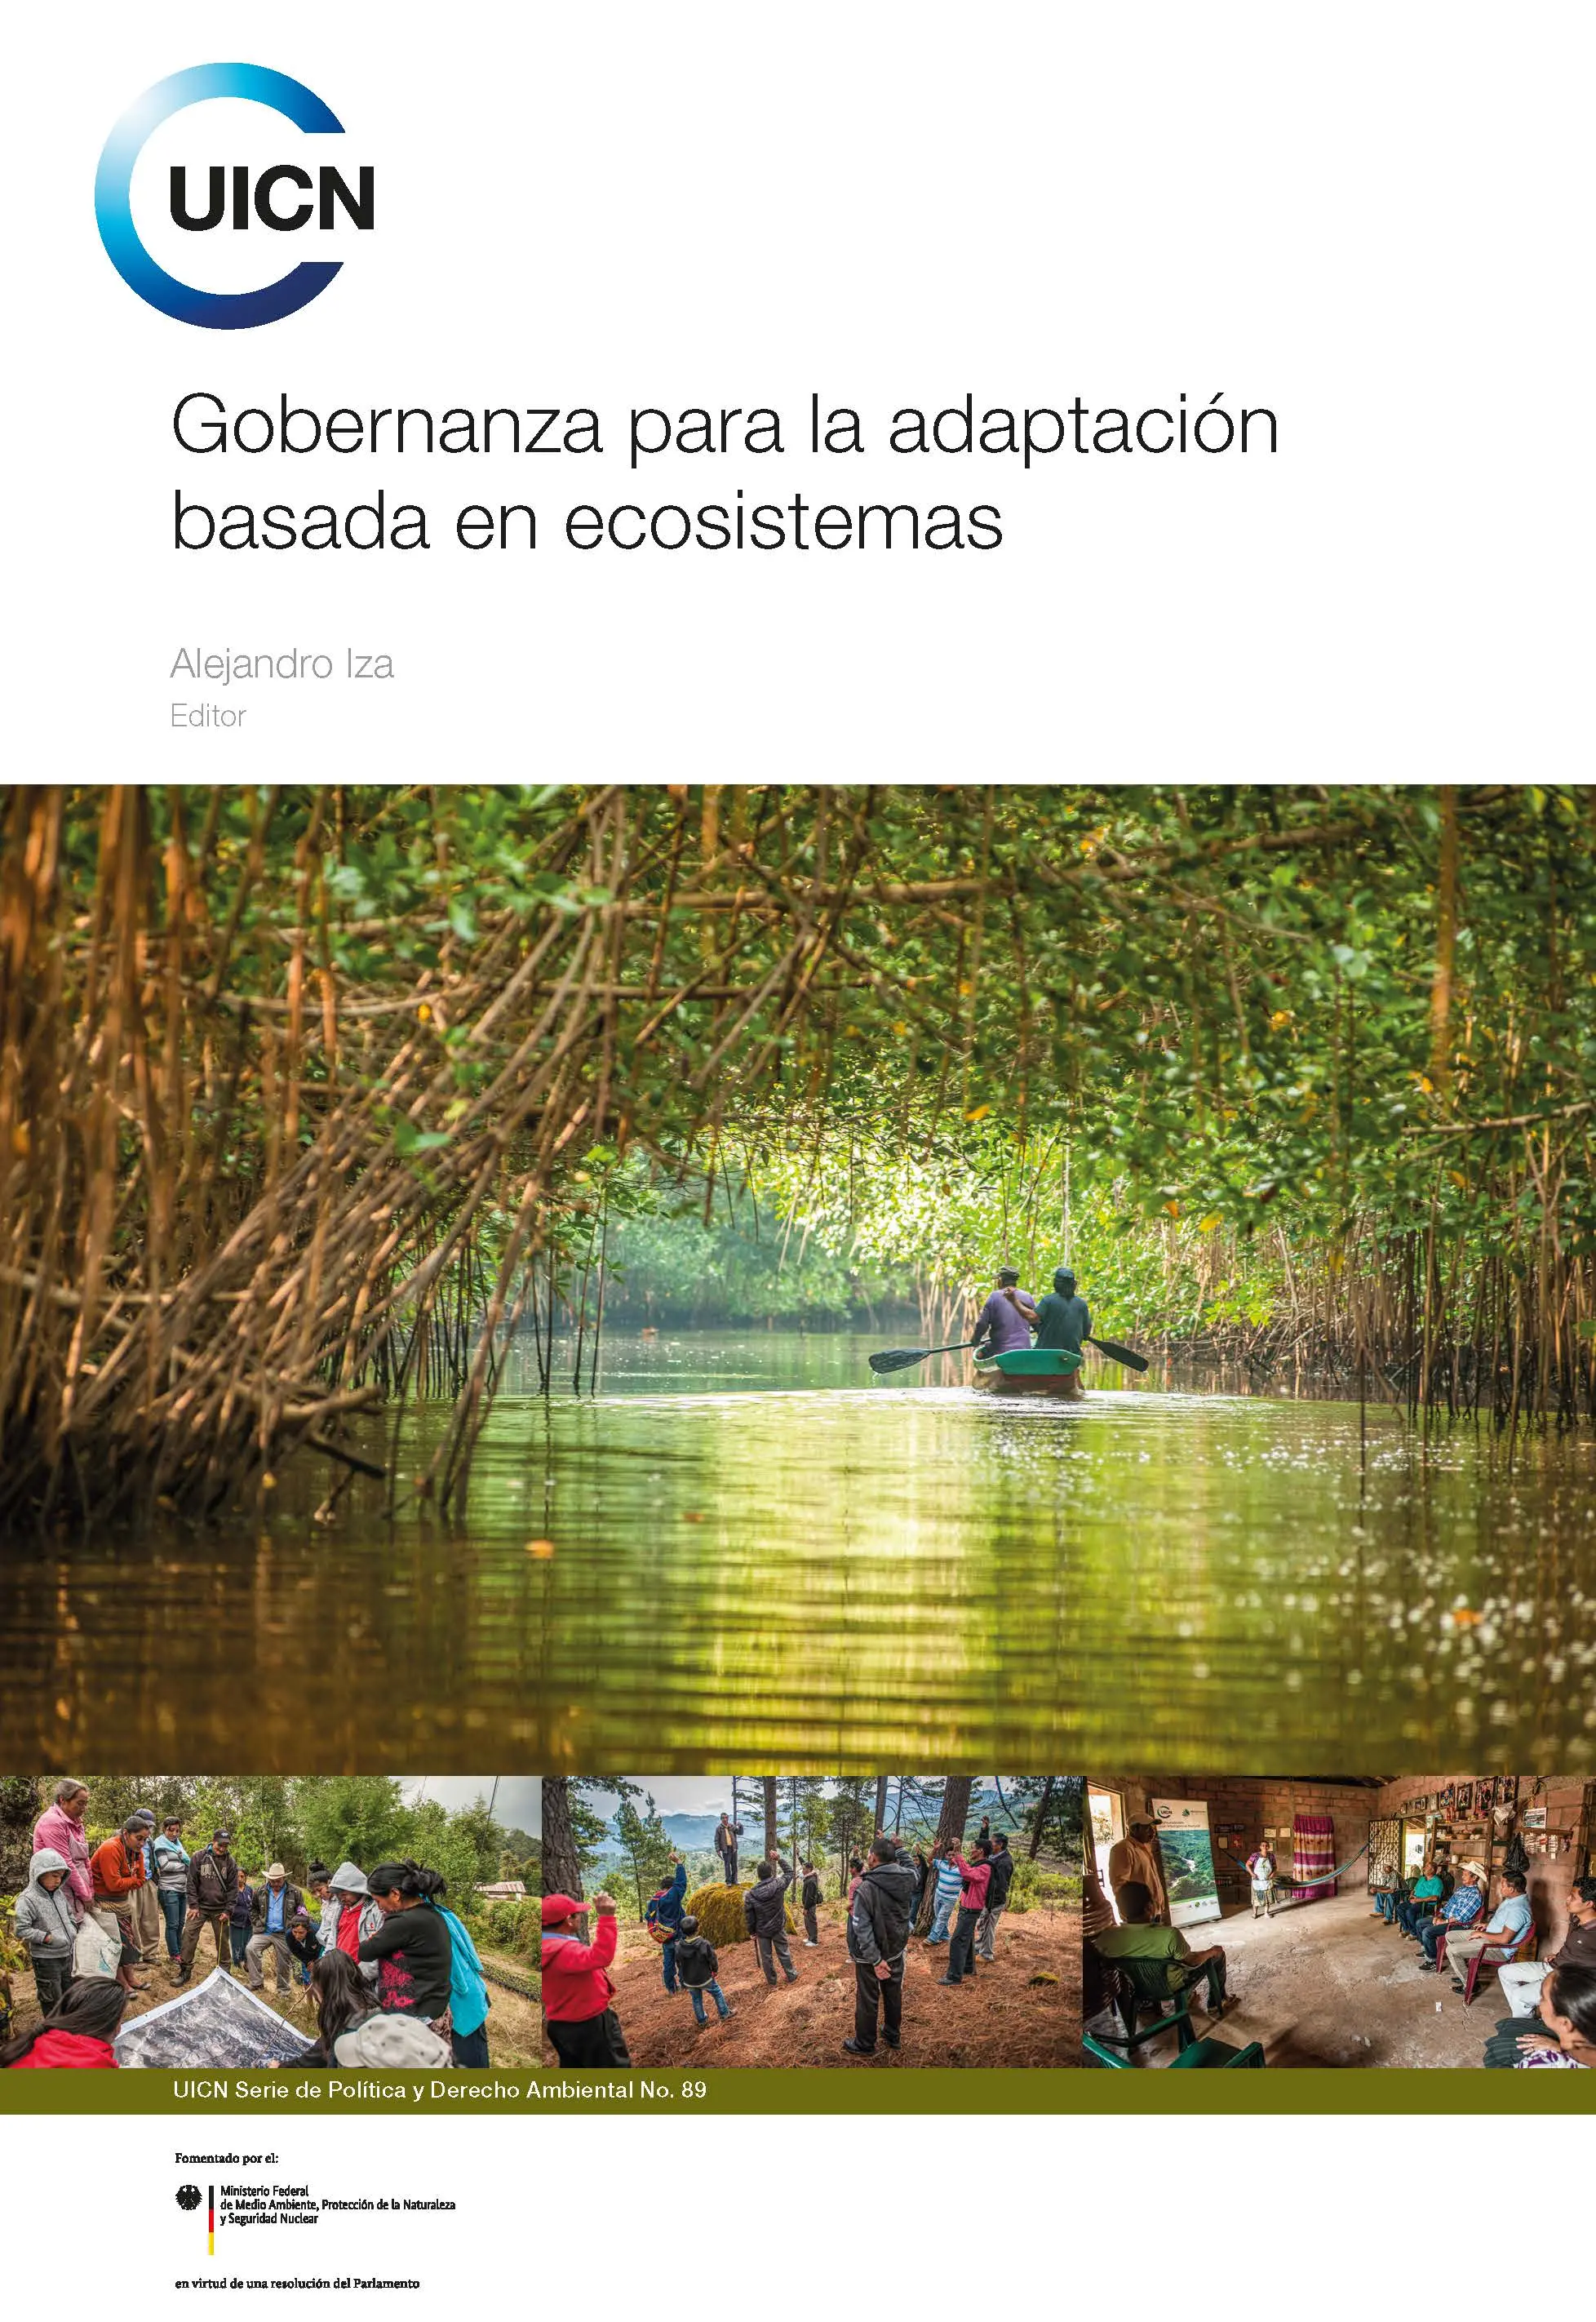 Cover of book "Gobernanza para la adaptación basada en ecosistemas"